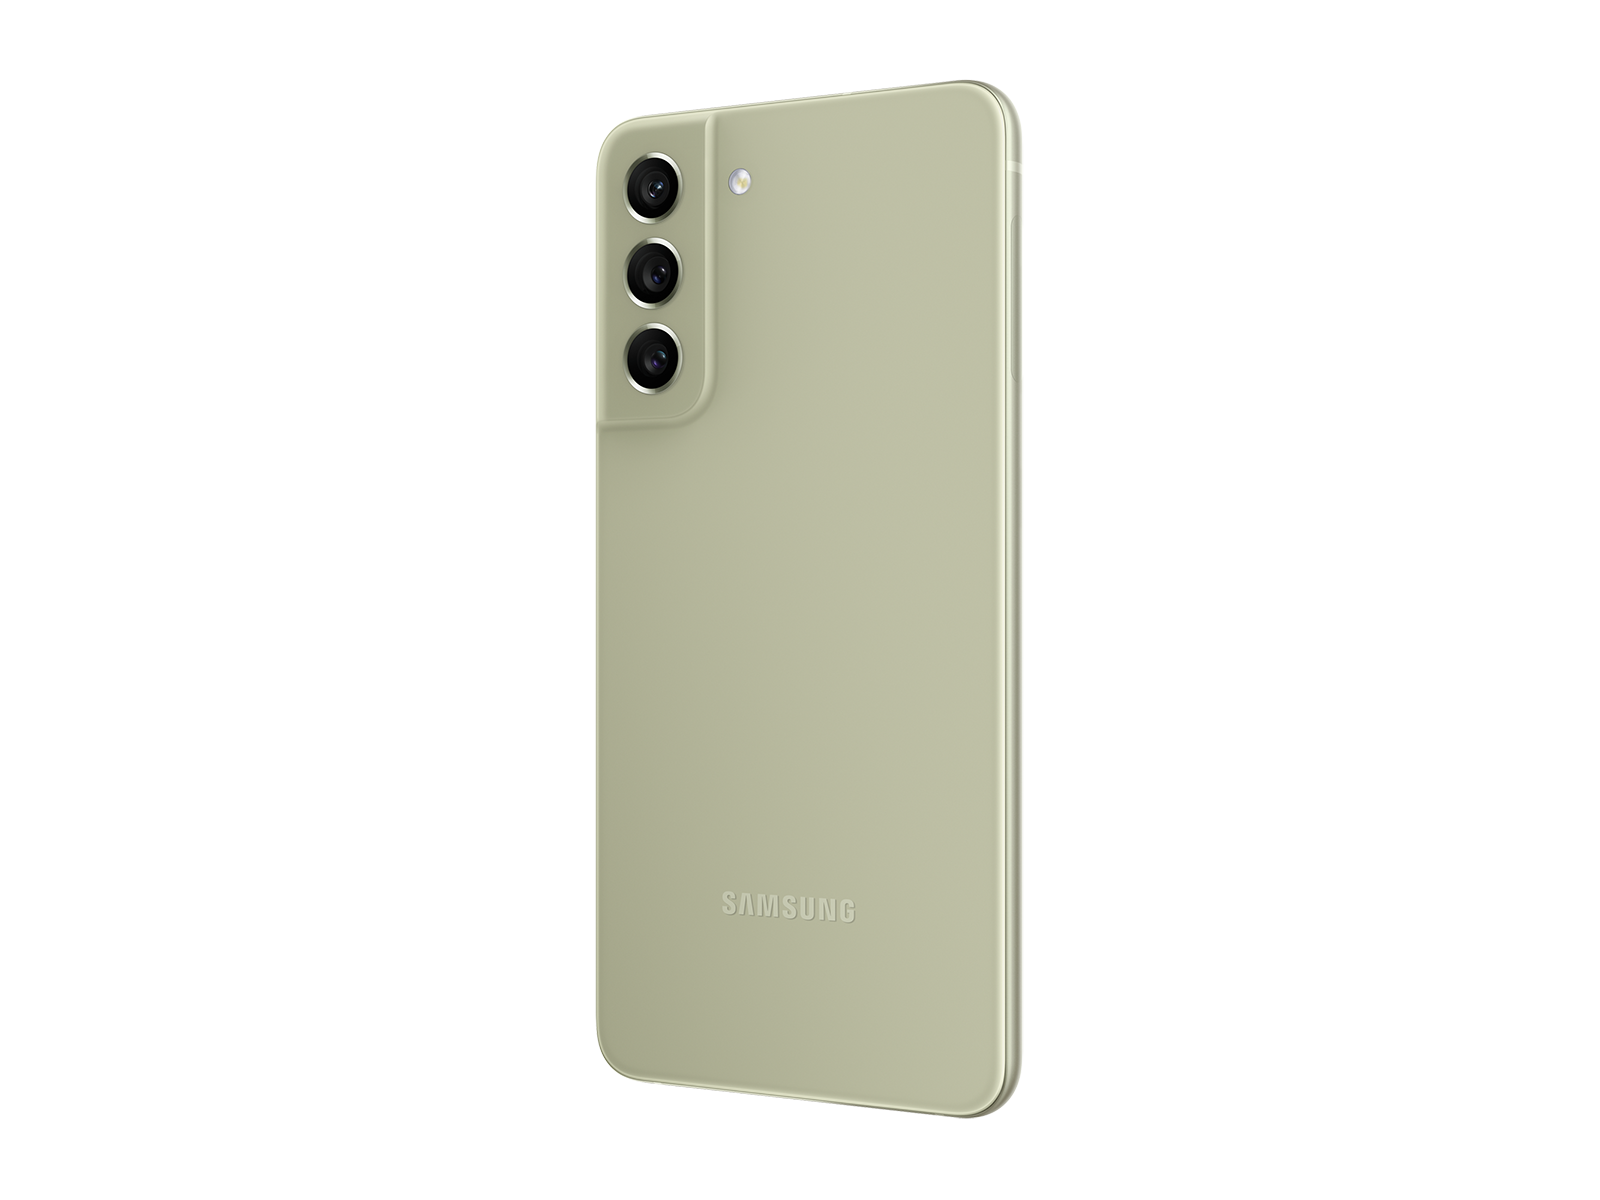 Thumbnail image of Galaxy S21 FE 5G, 128GB (U.S. Cellular)